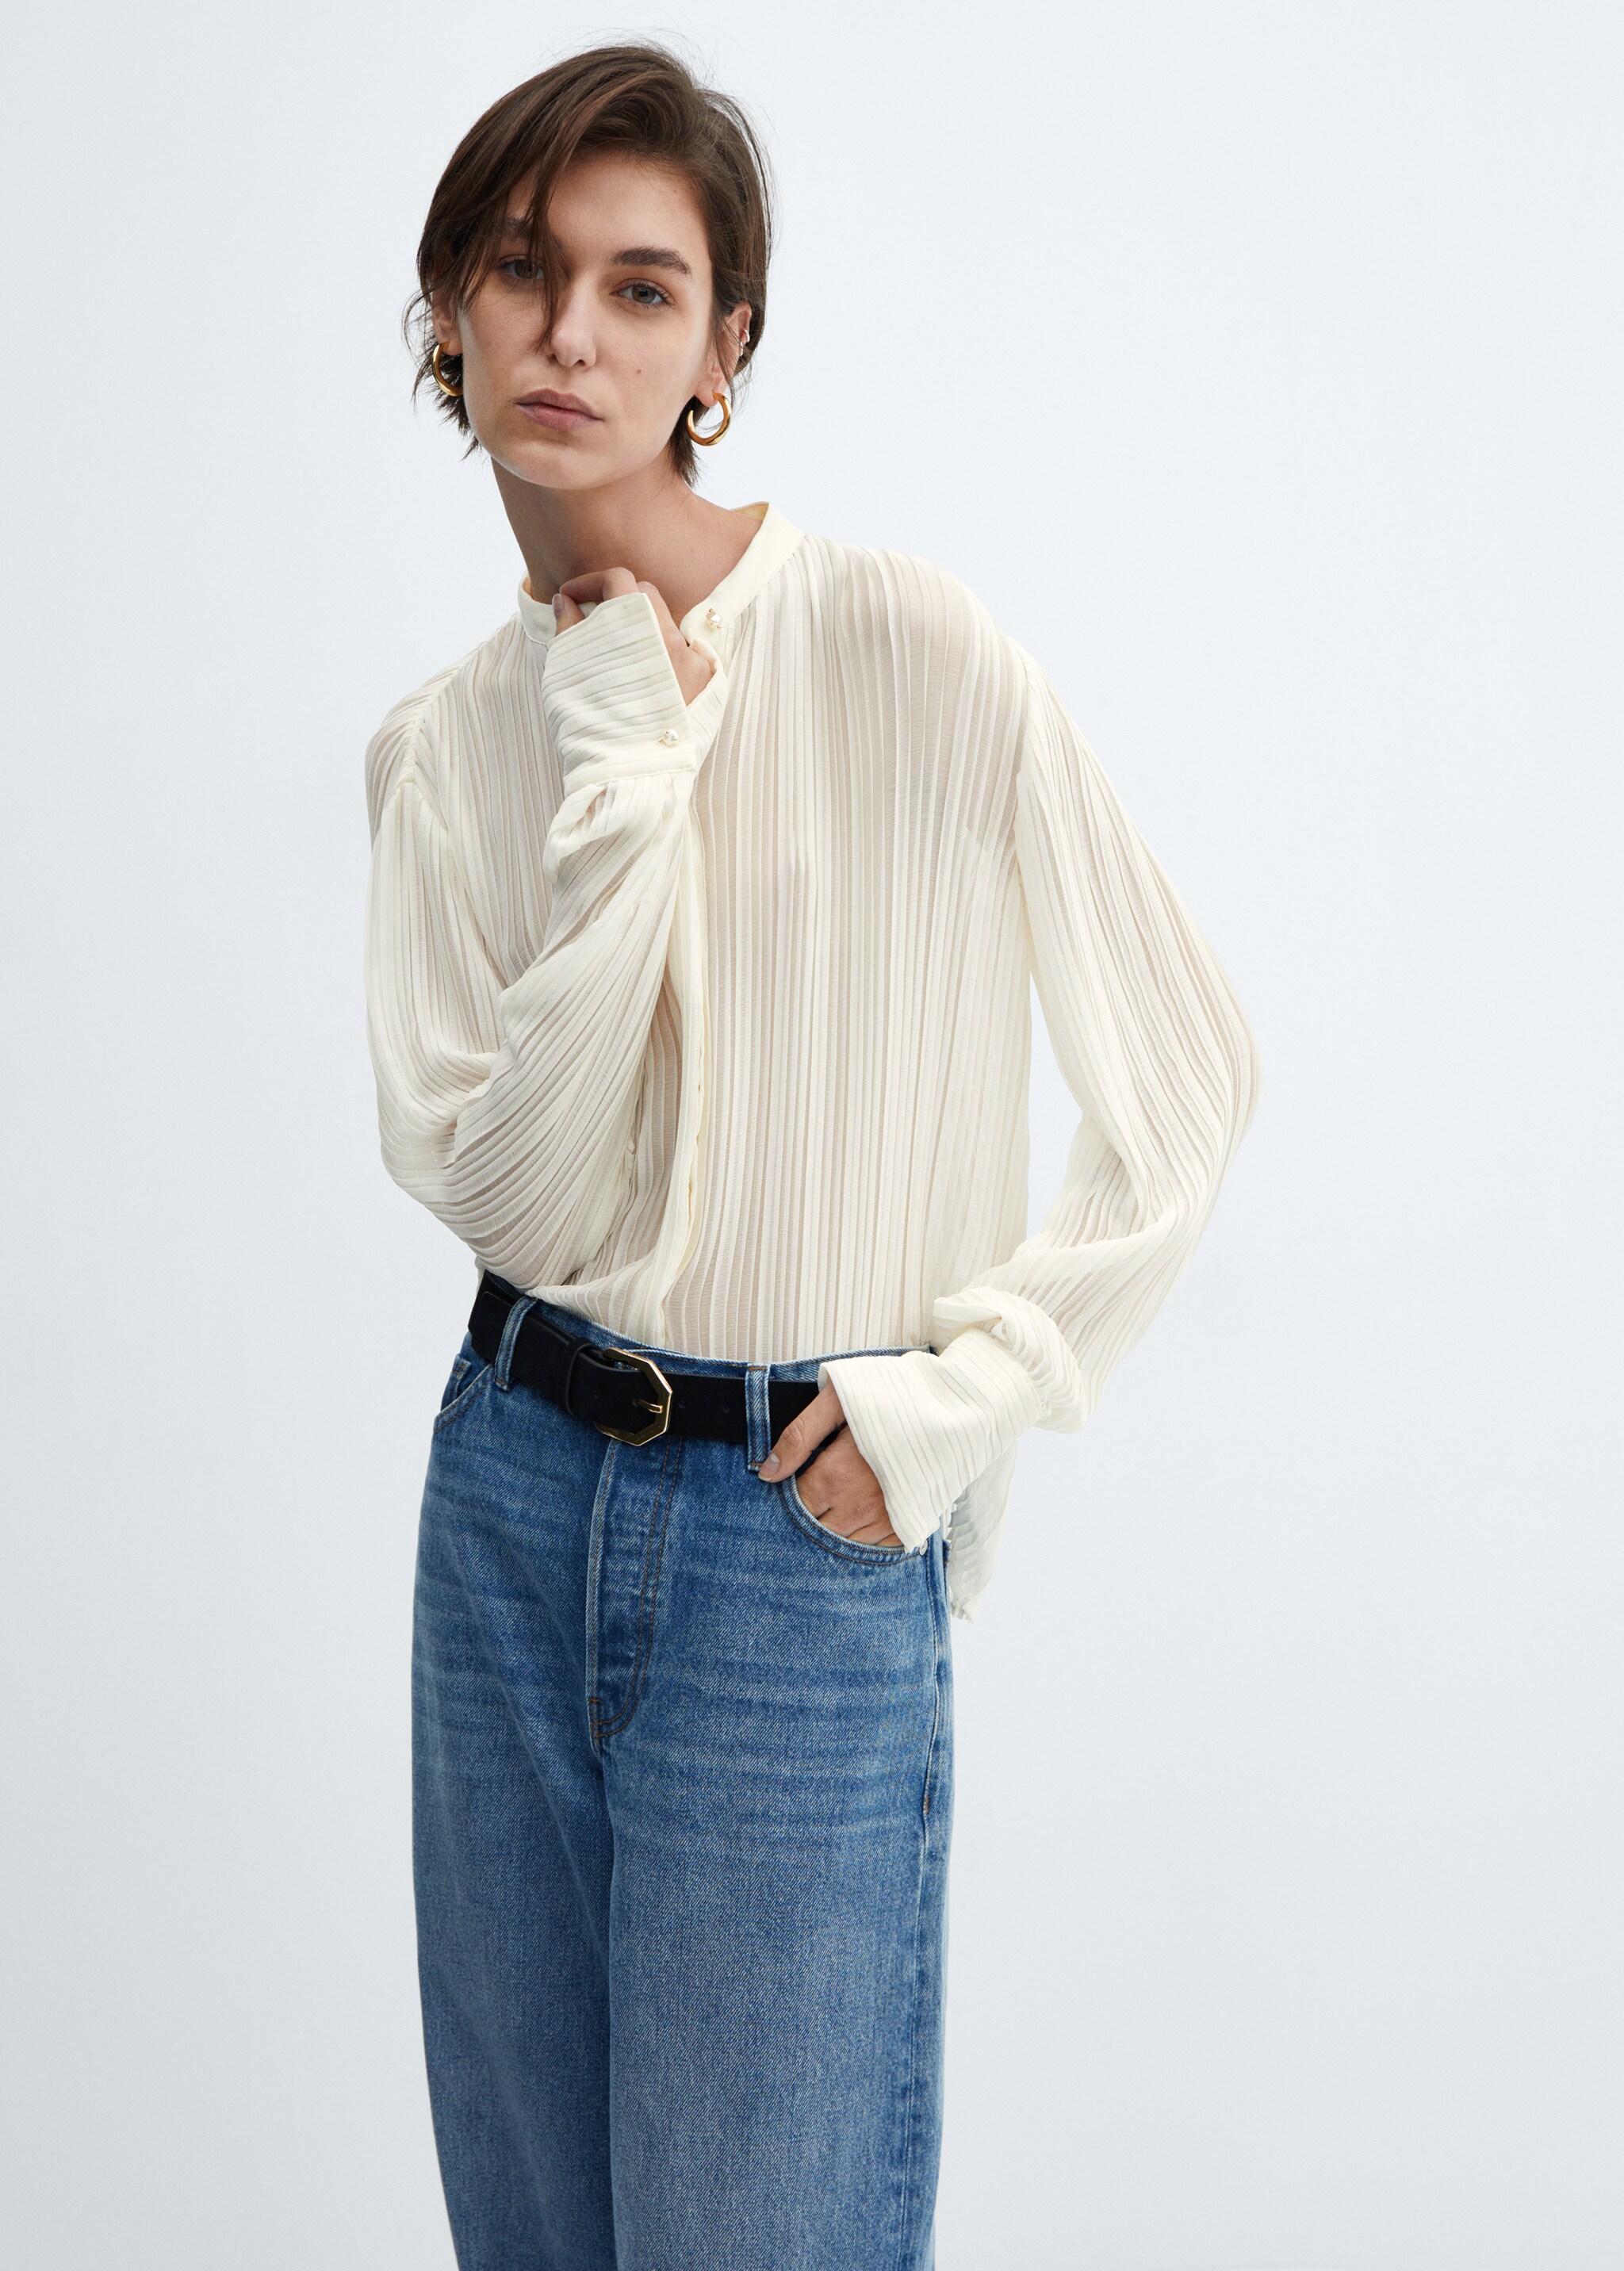 Semi-transparent pleated blouse - Medium plane